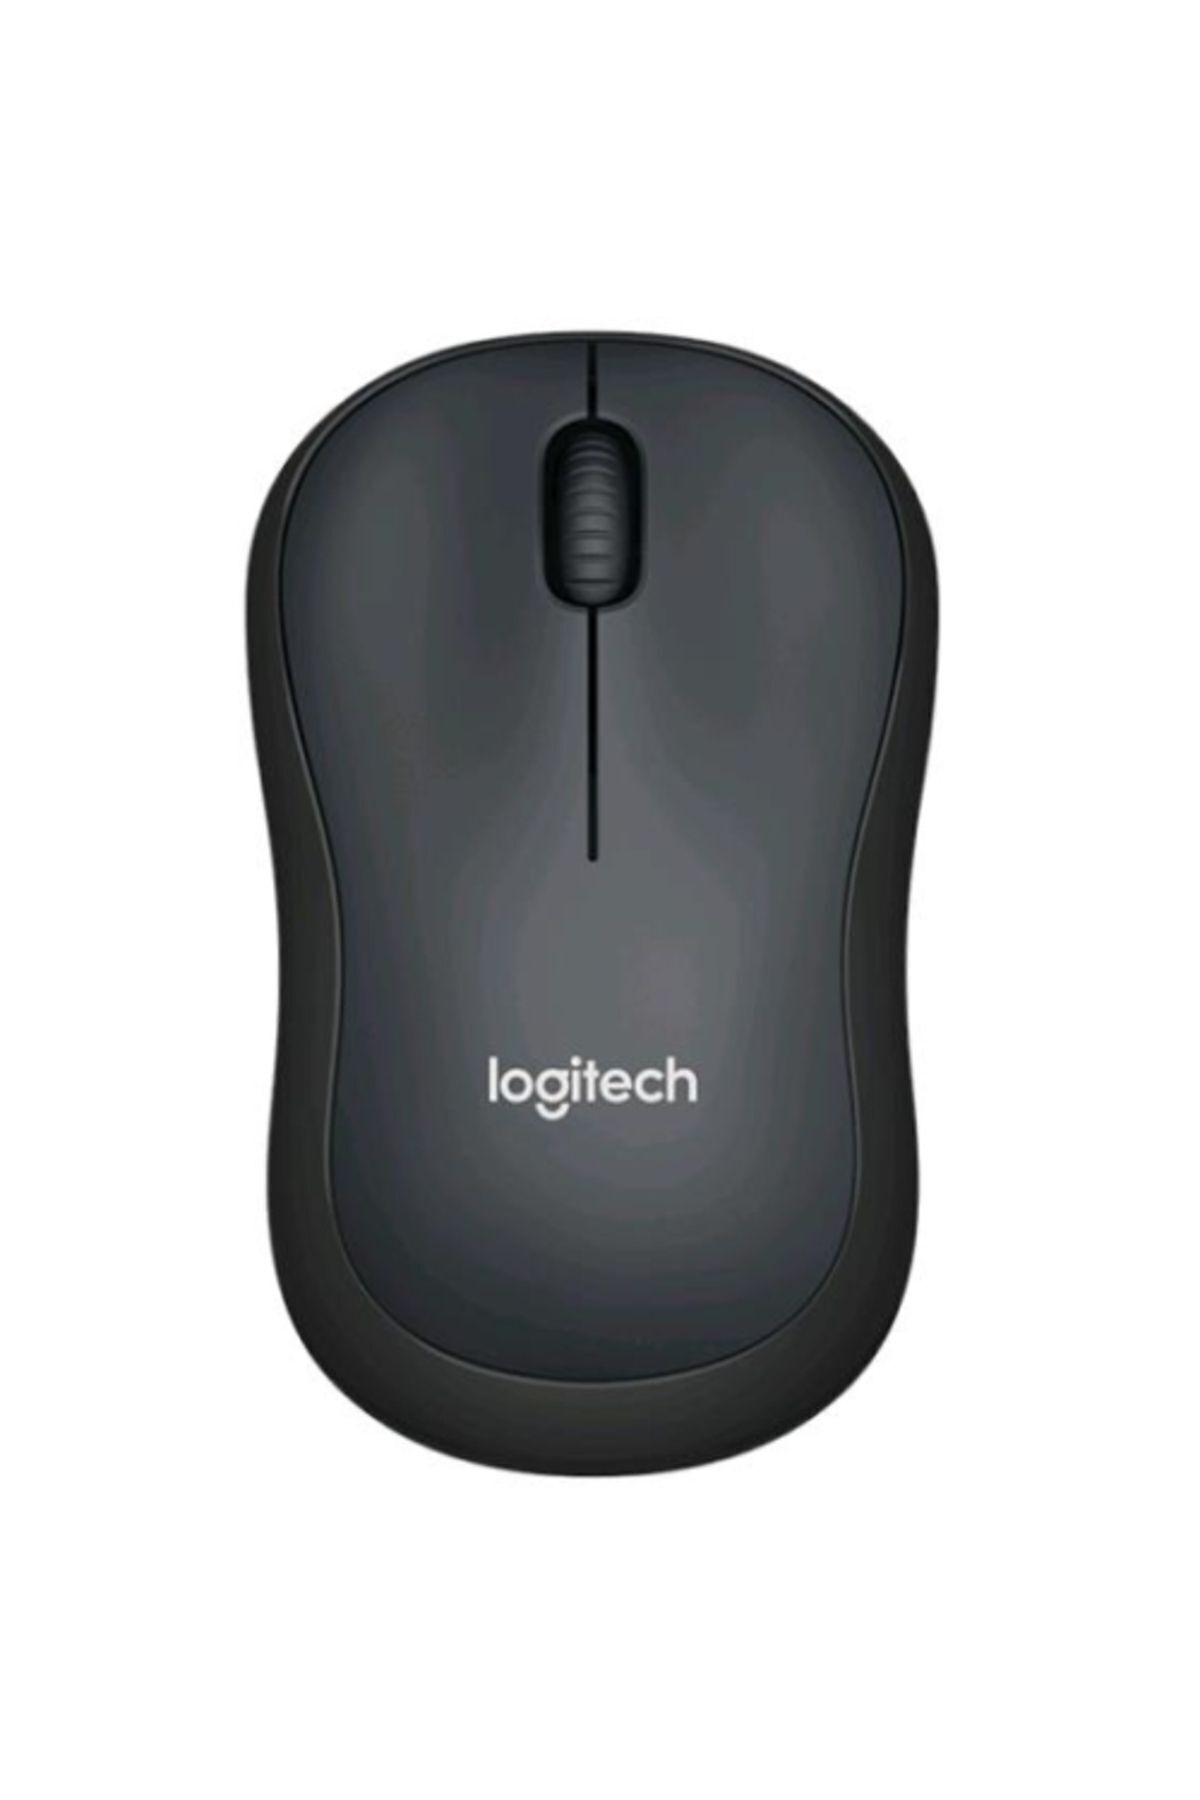 logitech M220 Mouse Silent Sessiz Kablosuz Siyah Kompakt USB Alıcı